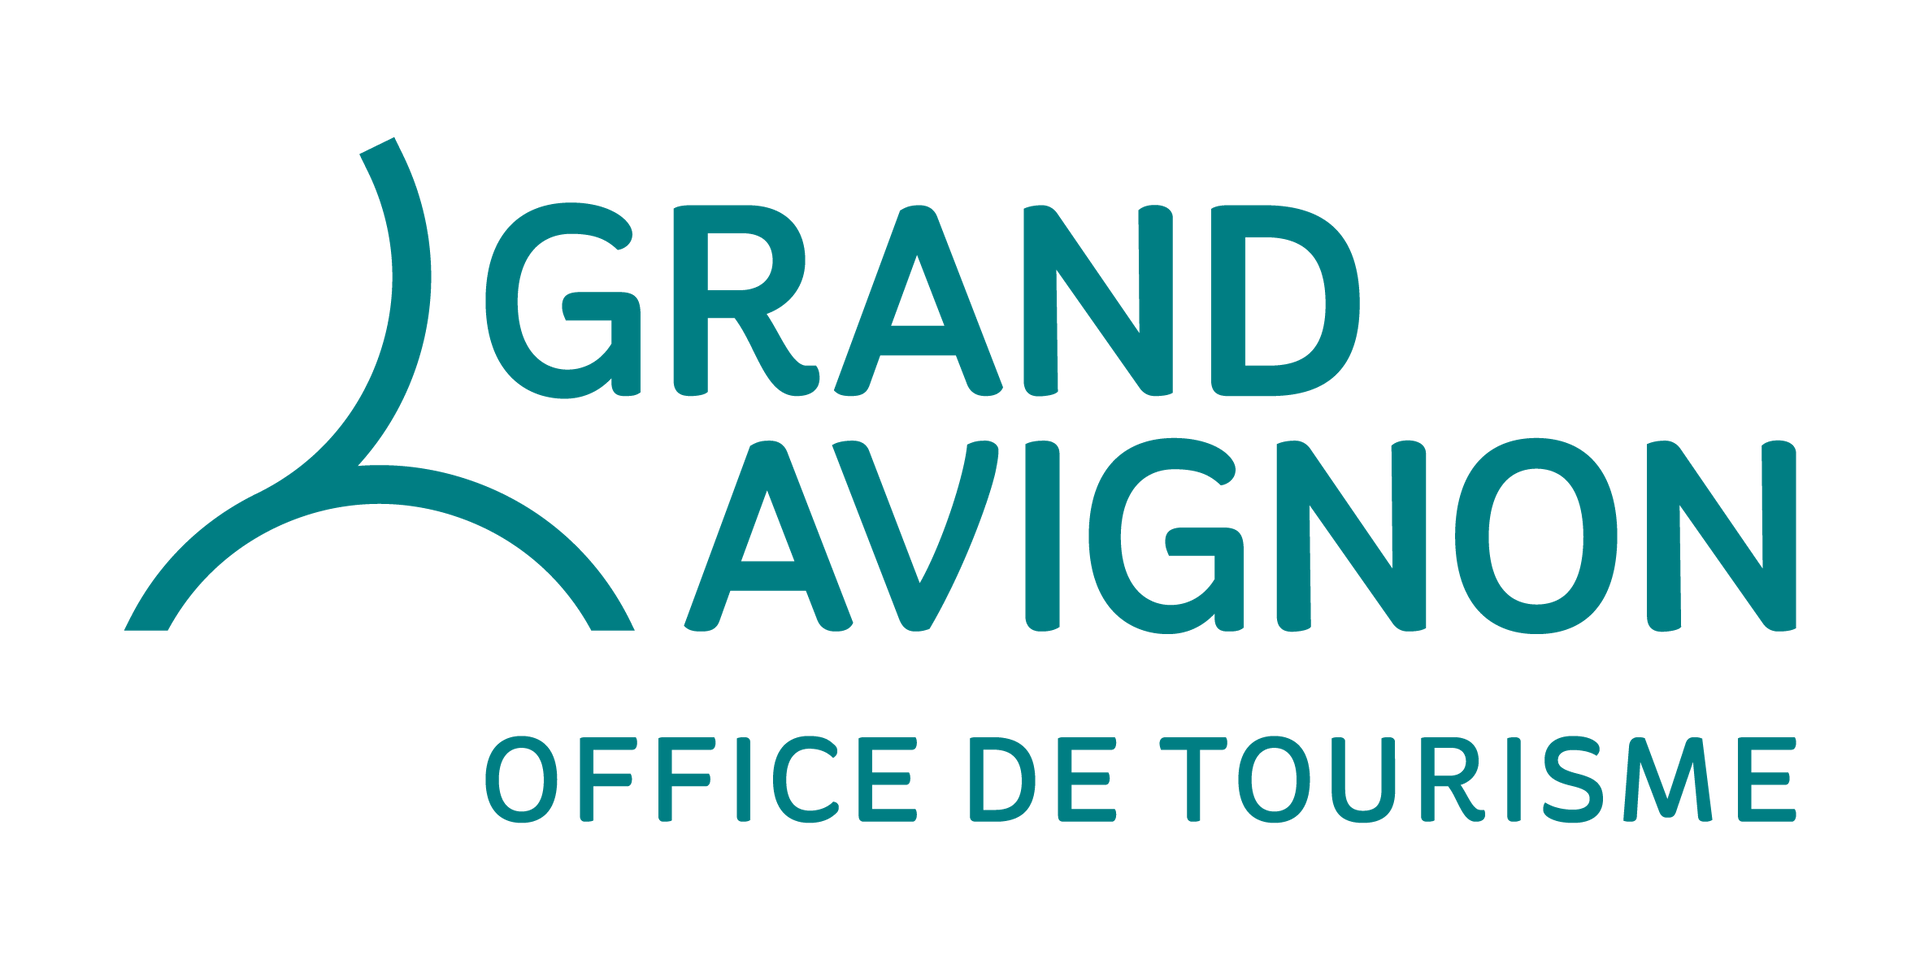 Office de tourisme Grand Avignon